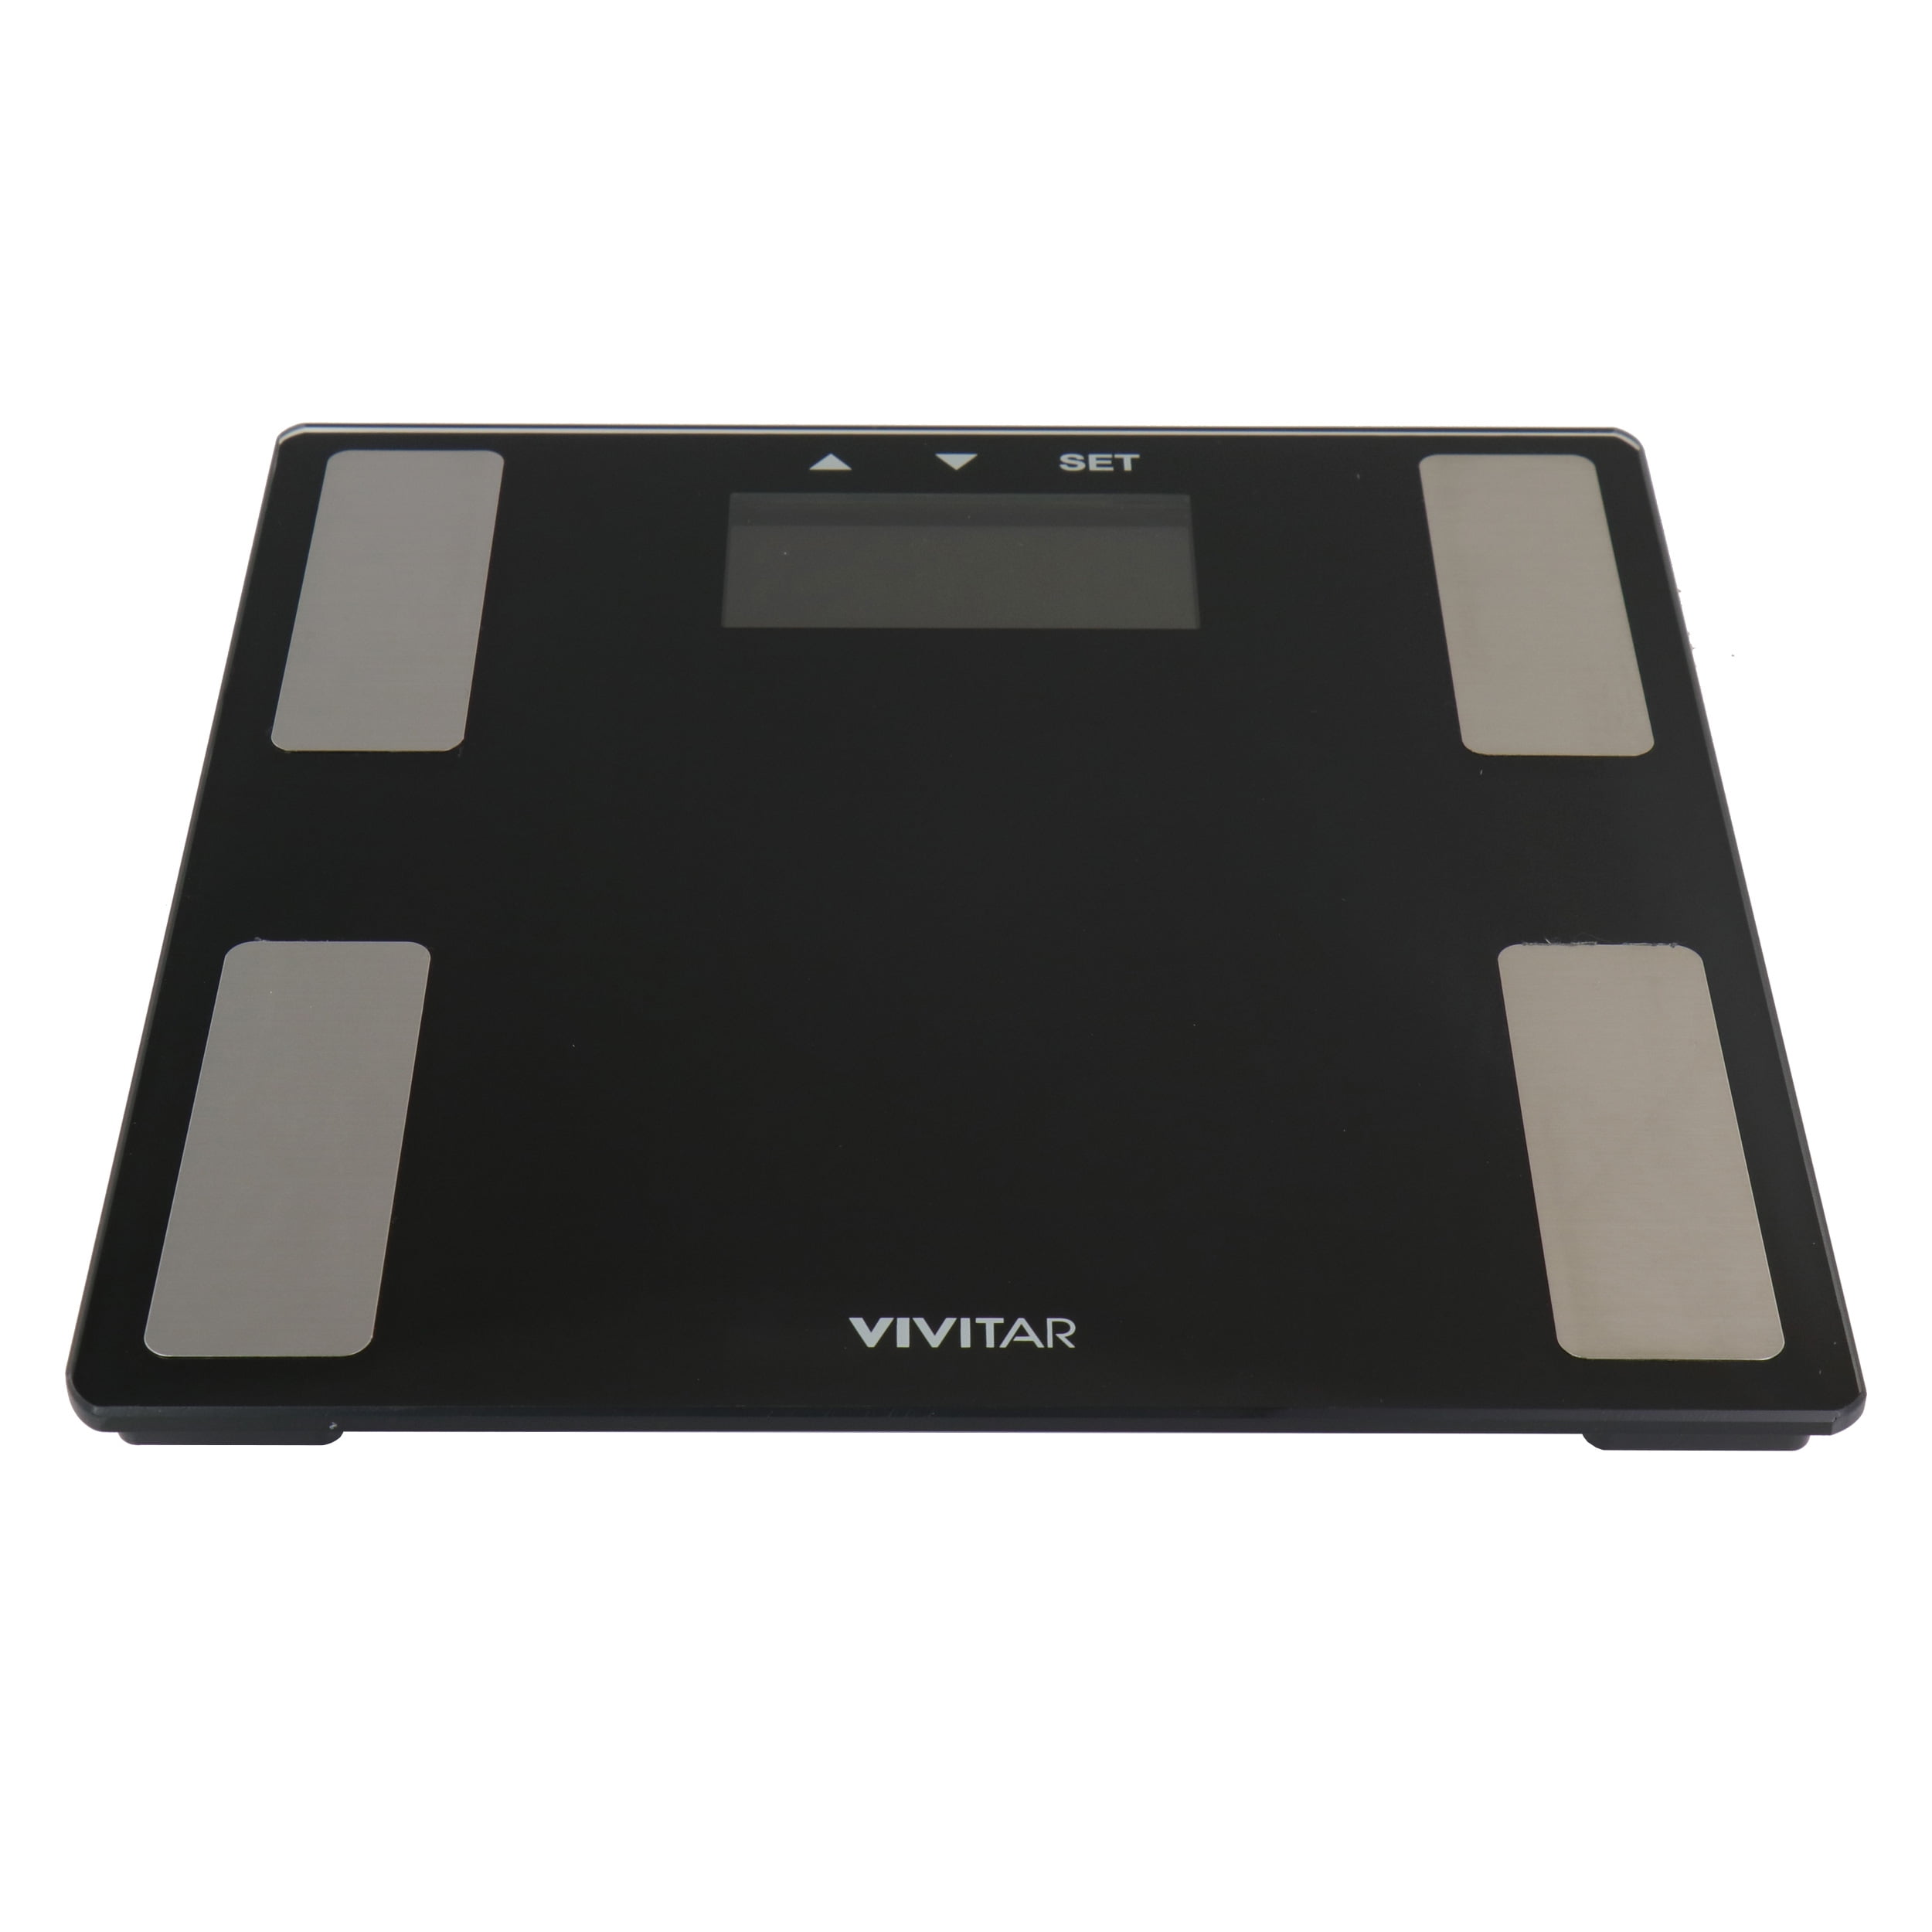 Vivitar PS-V163-B Body Analysis Digital Bathroom Scale With An